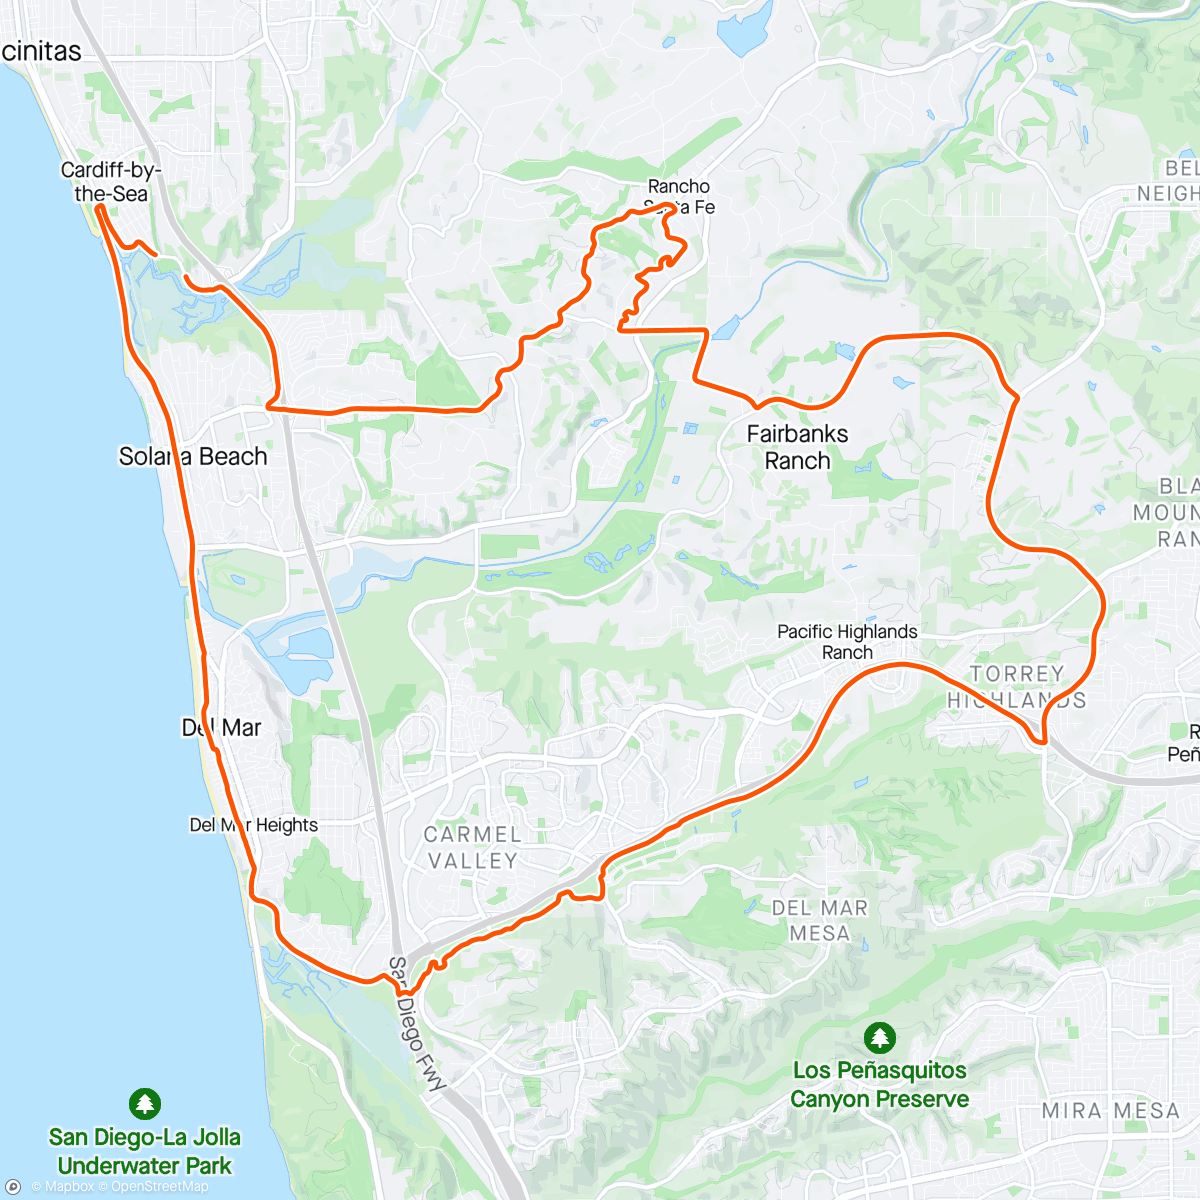 「56 bike path and Rancho Santa Fe」活動的地圖